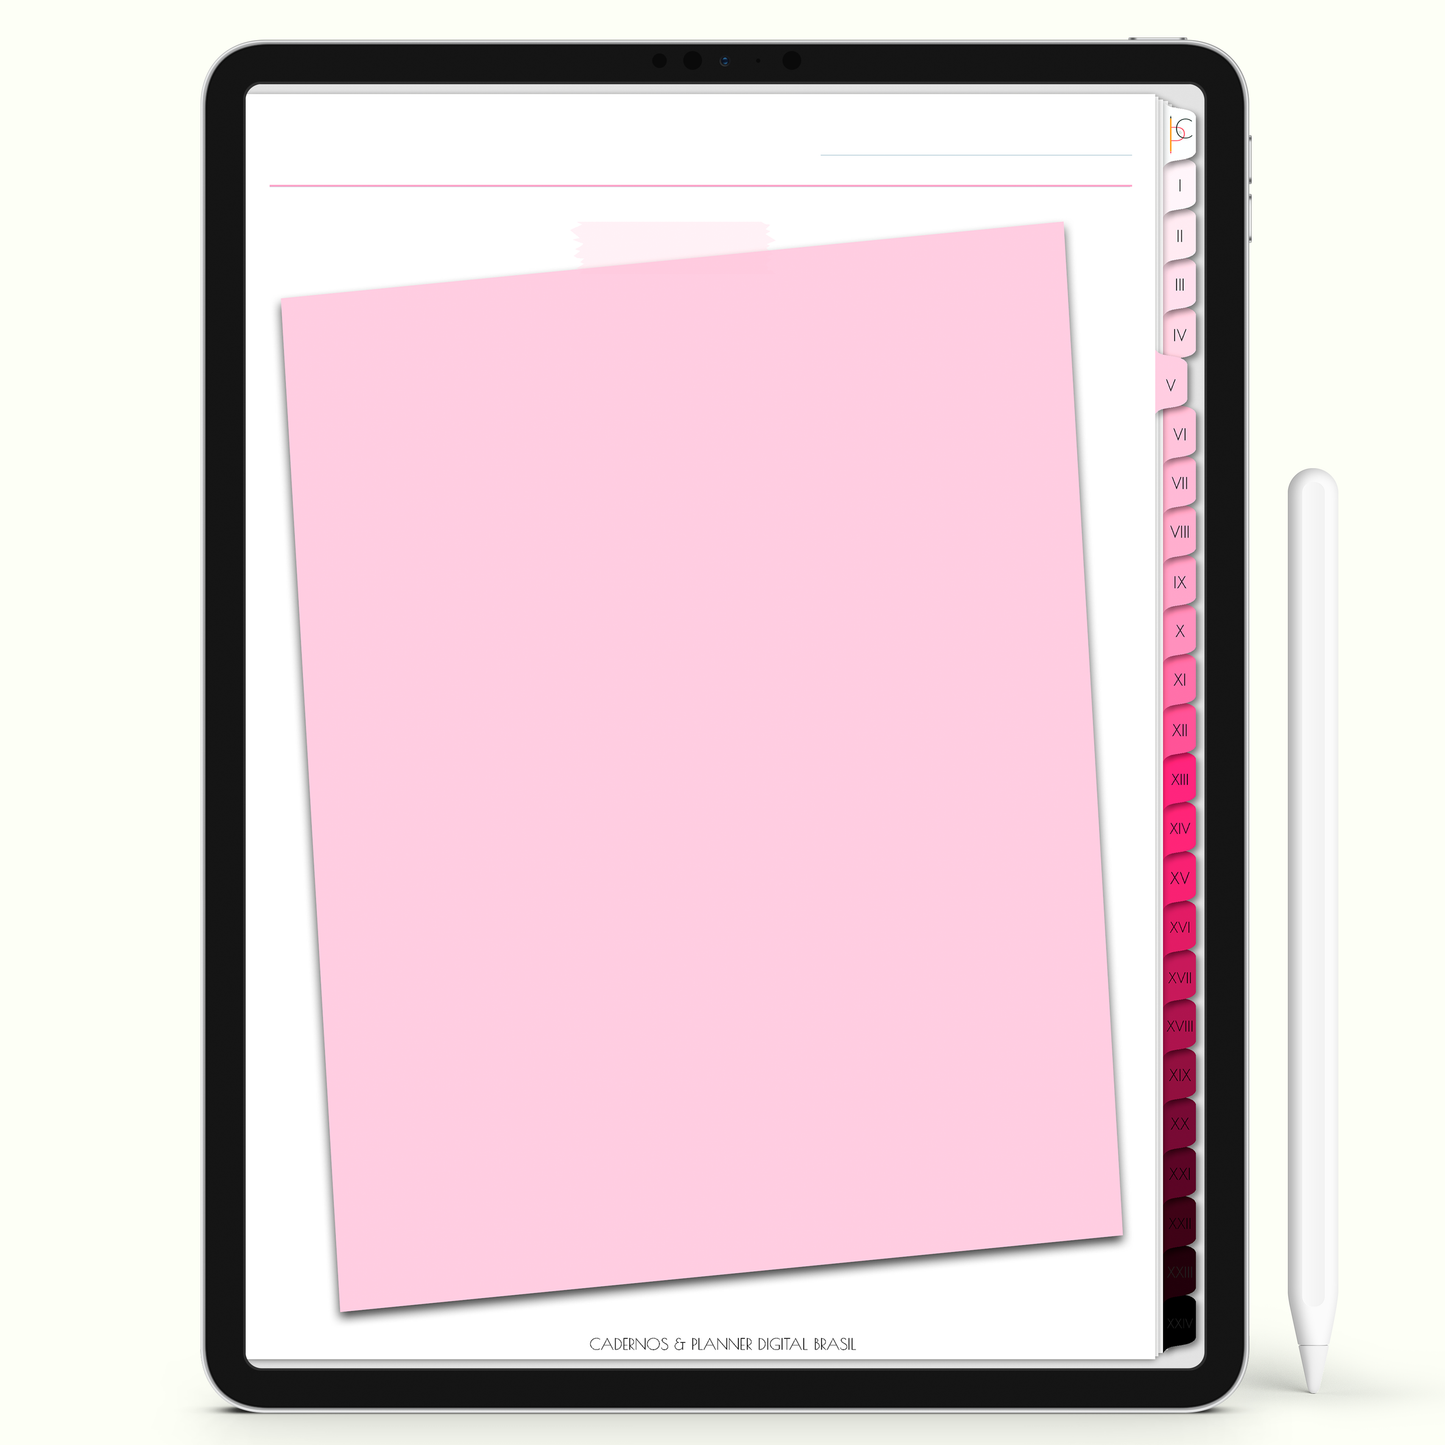 Caderno Digital Blush Biomedicina Lab Pink  24 Matérias • Para iPad e Tablet Android • Download instantâneo • Sustentável